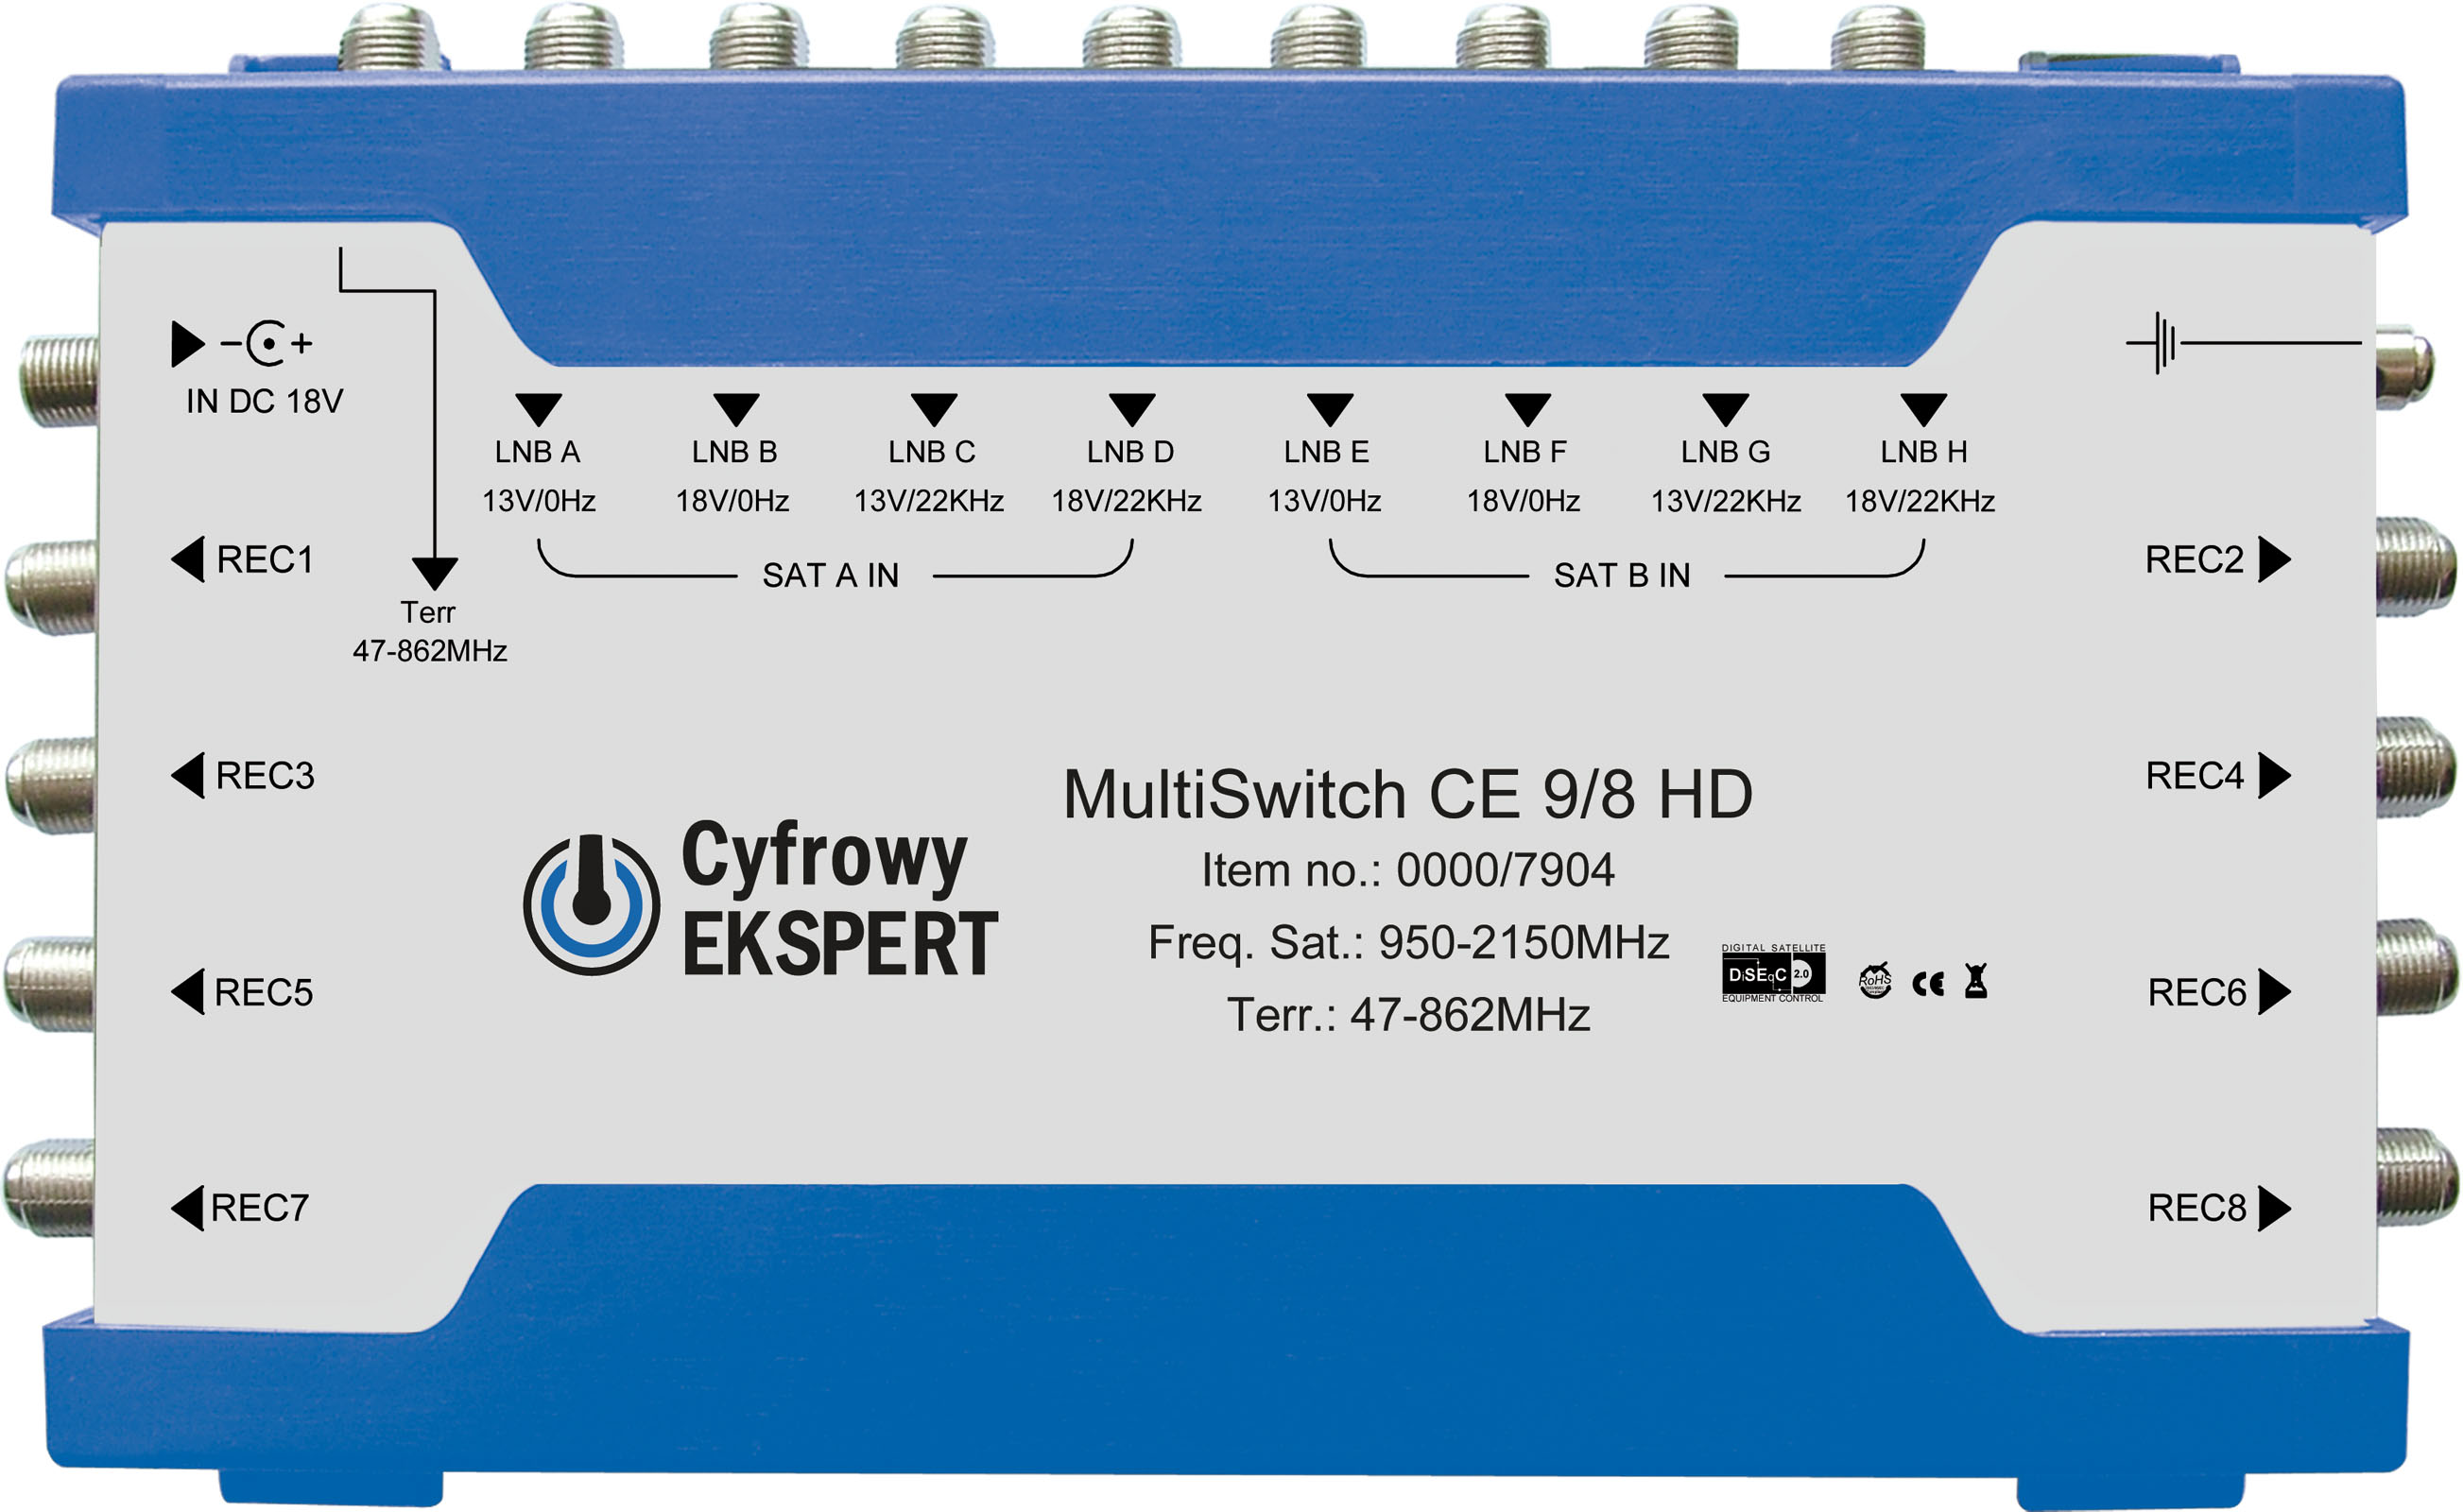 Multiswitch CE 9/8 HD